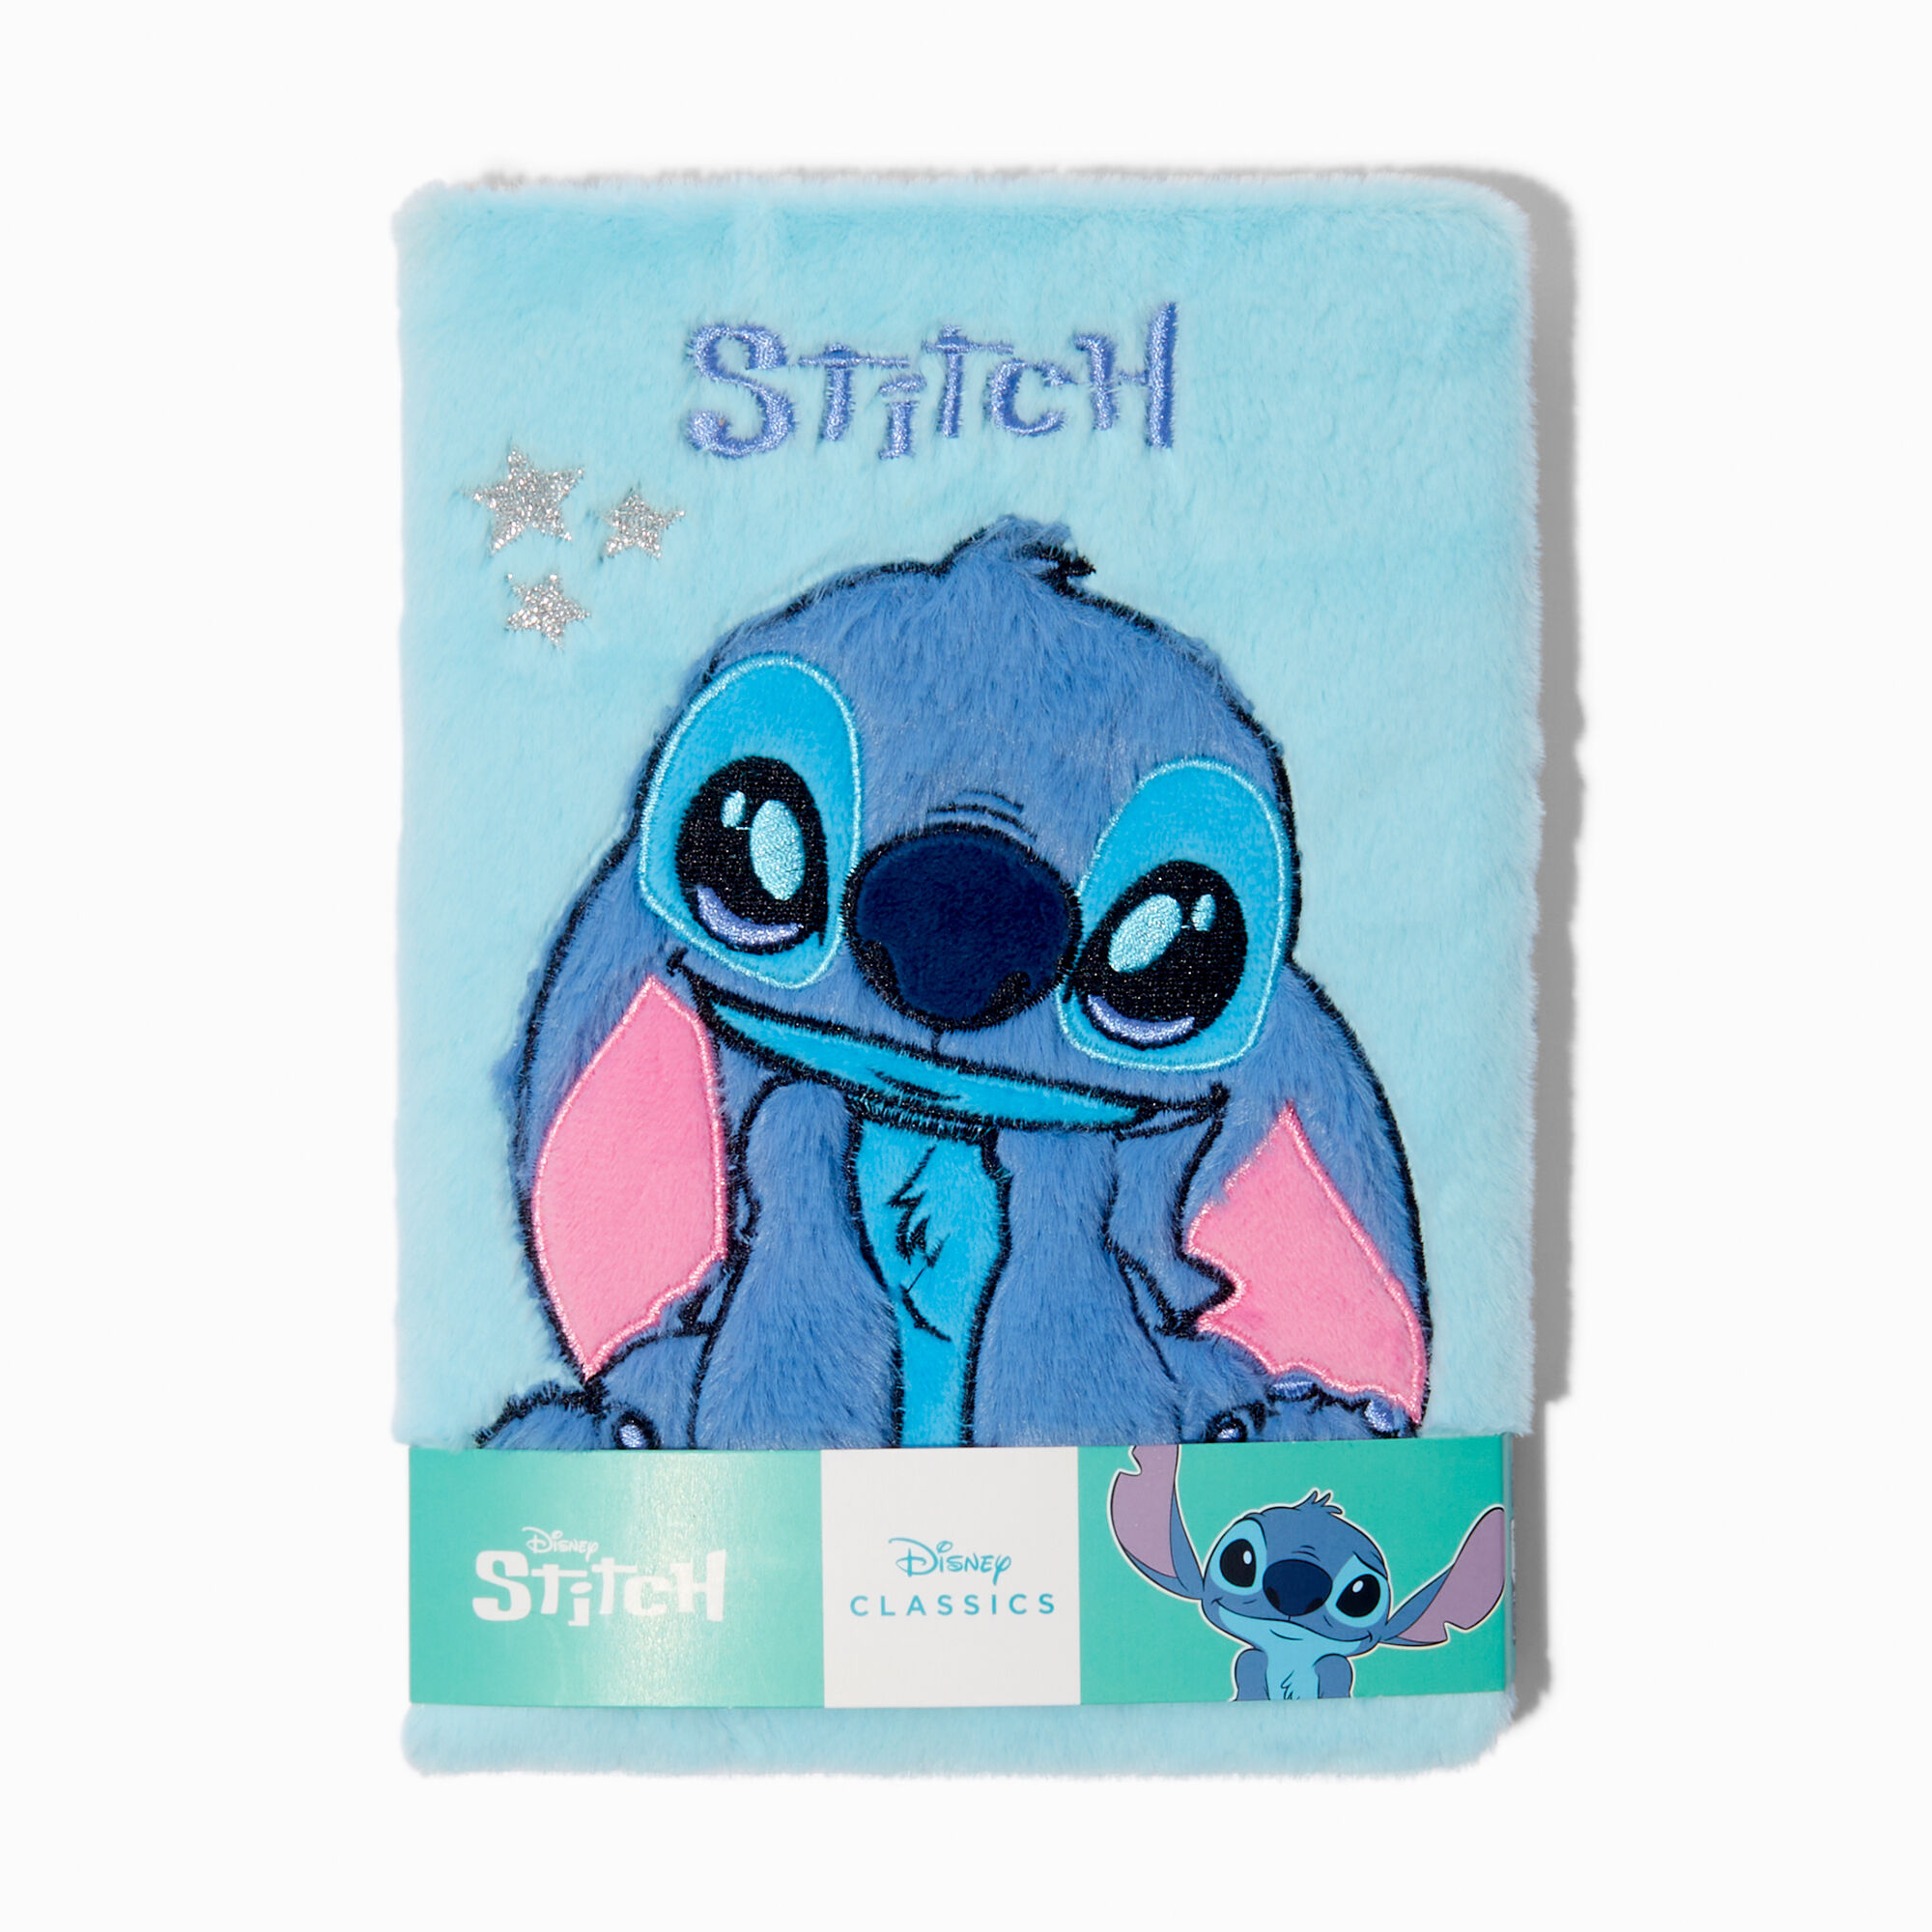 View Claires Disney Stitch Sleepy Furry Notebook information